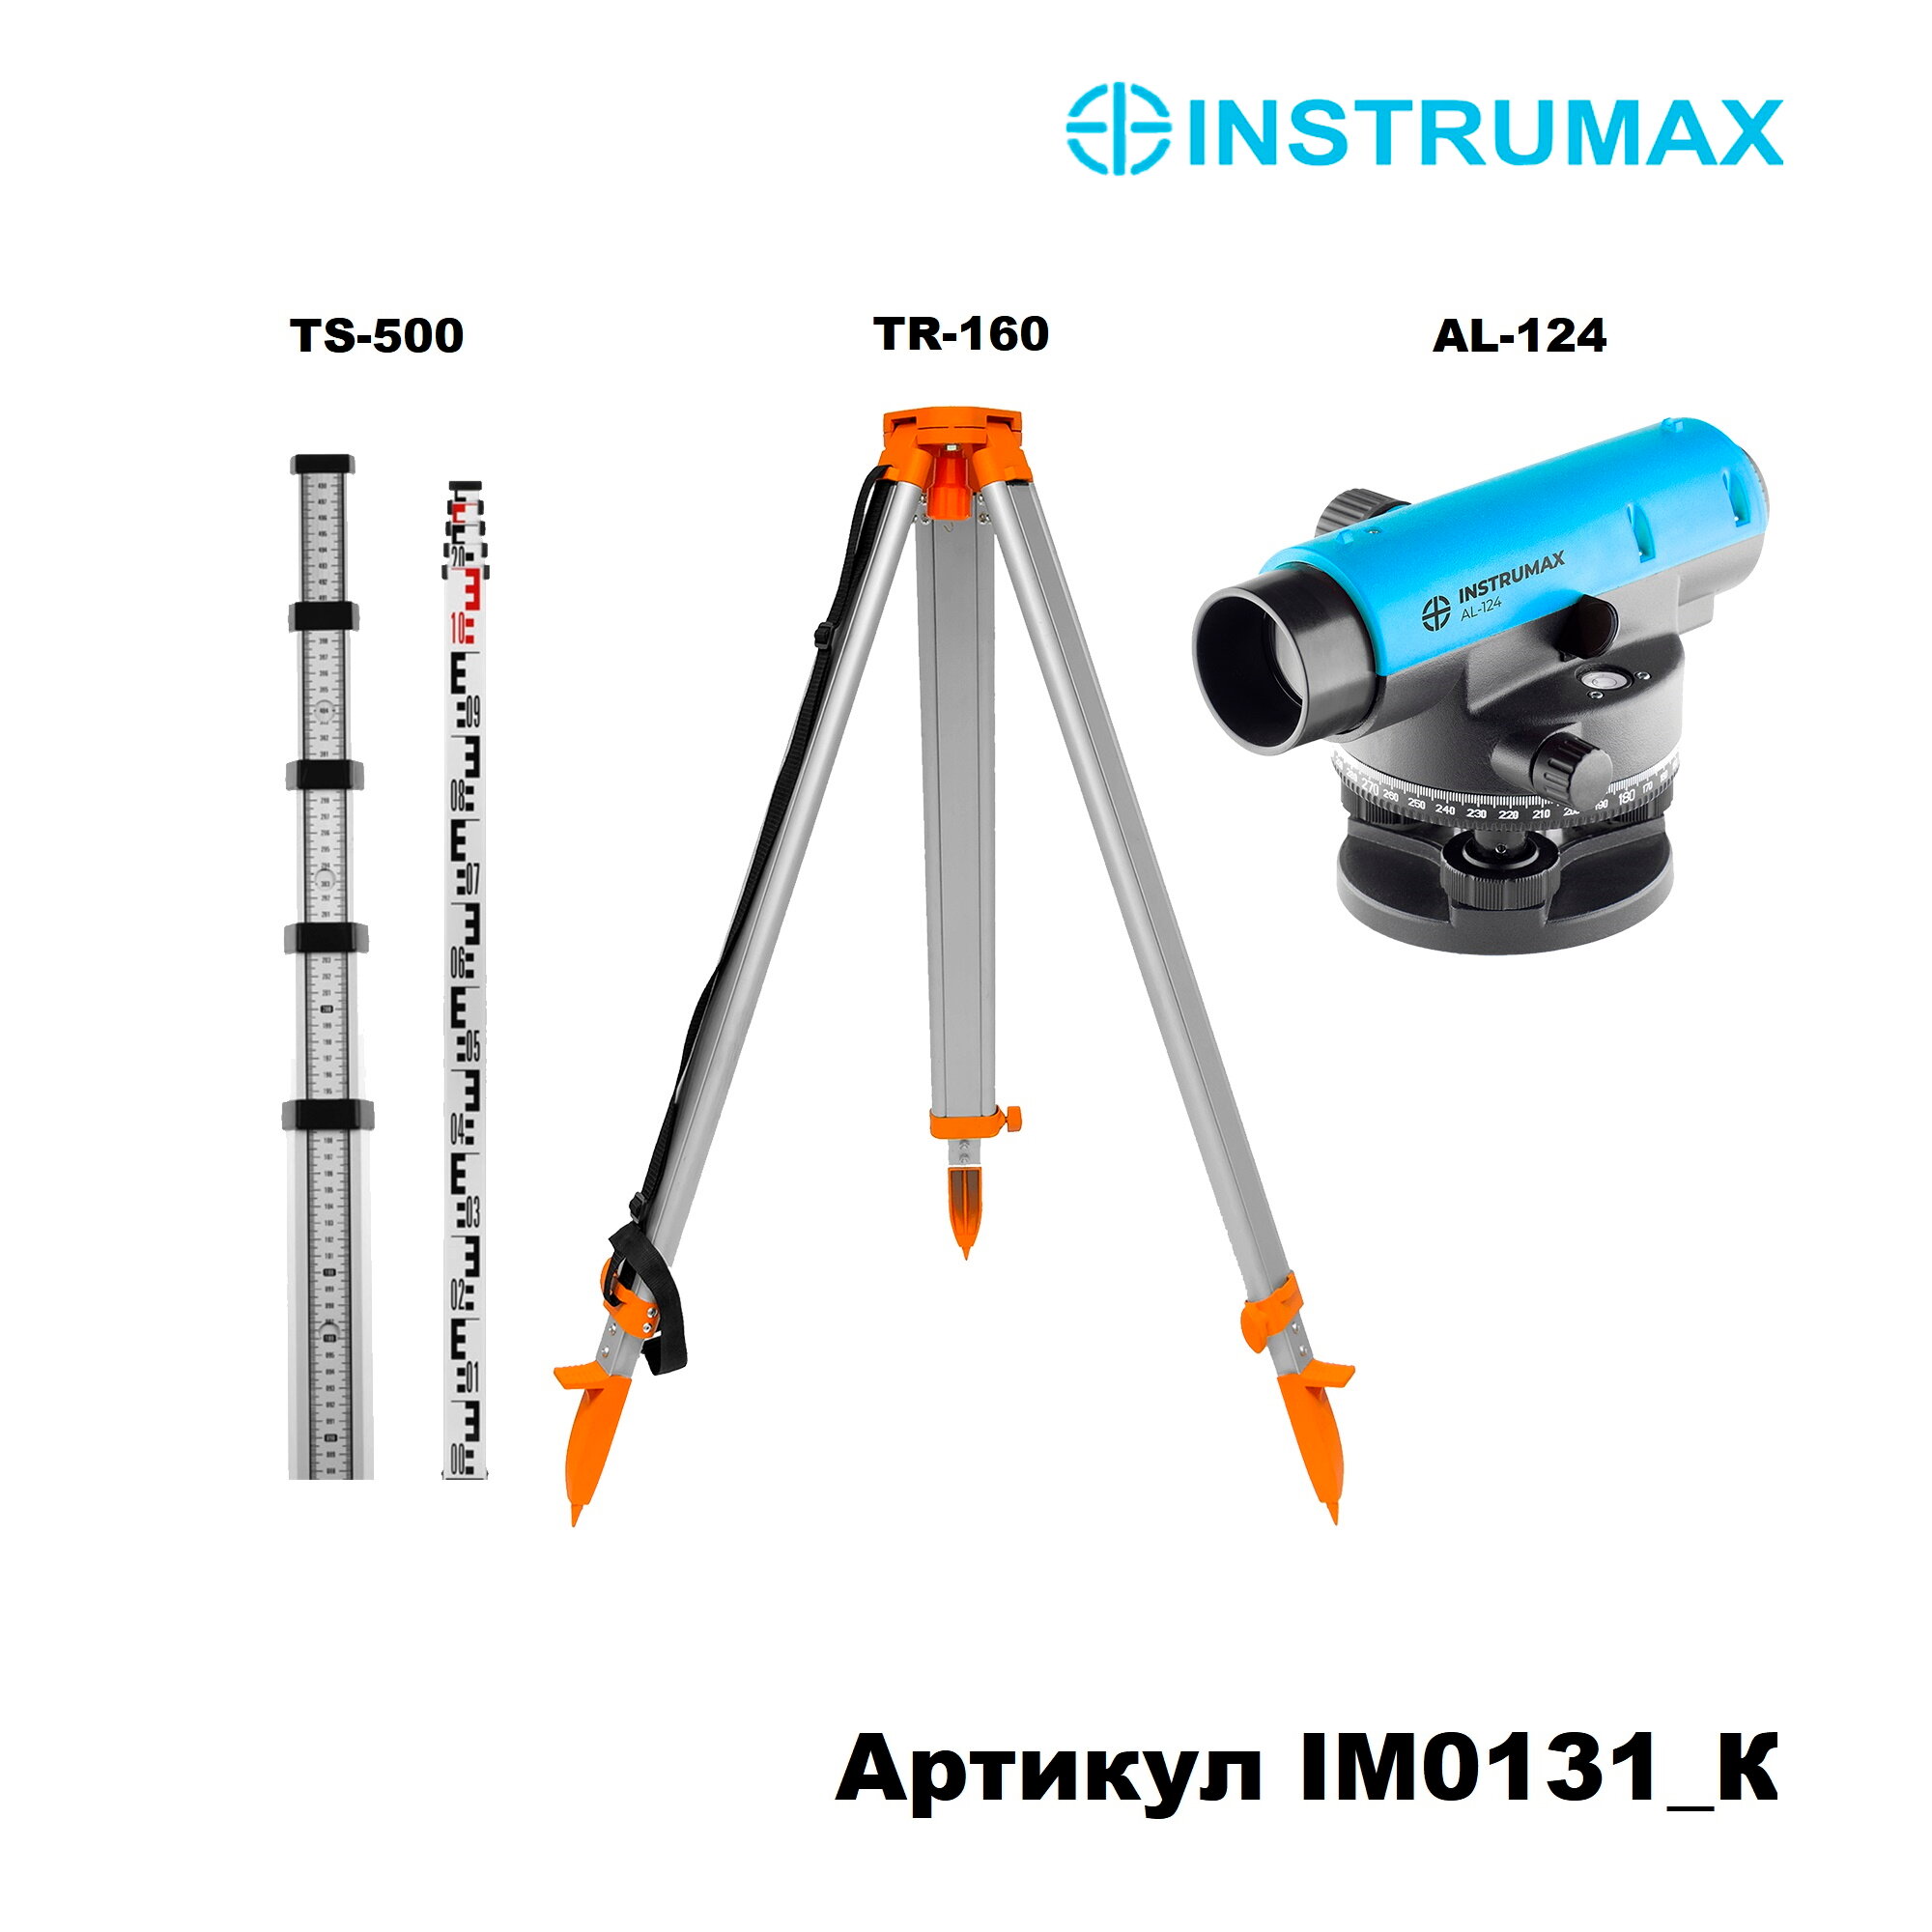 Акция Оптический нивелир INSTRUMAX AL-124 + INSTRUMAX TS-500 + INSTRUMAX TR-160